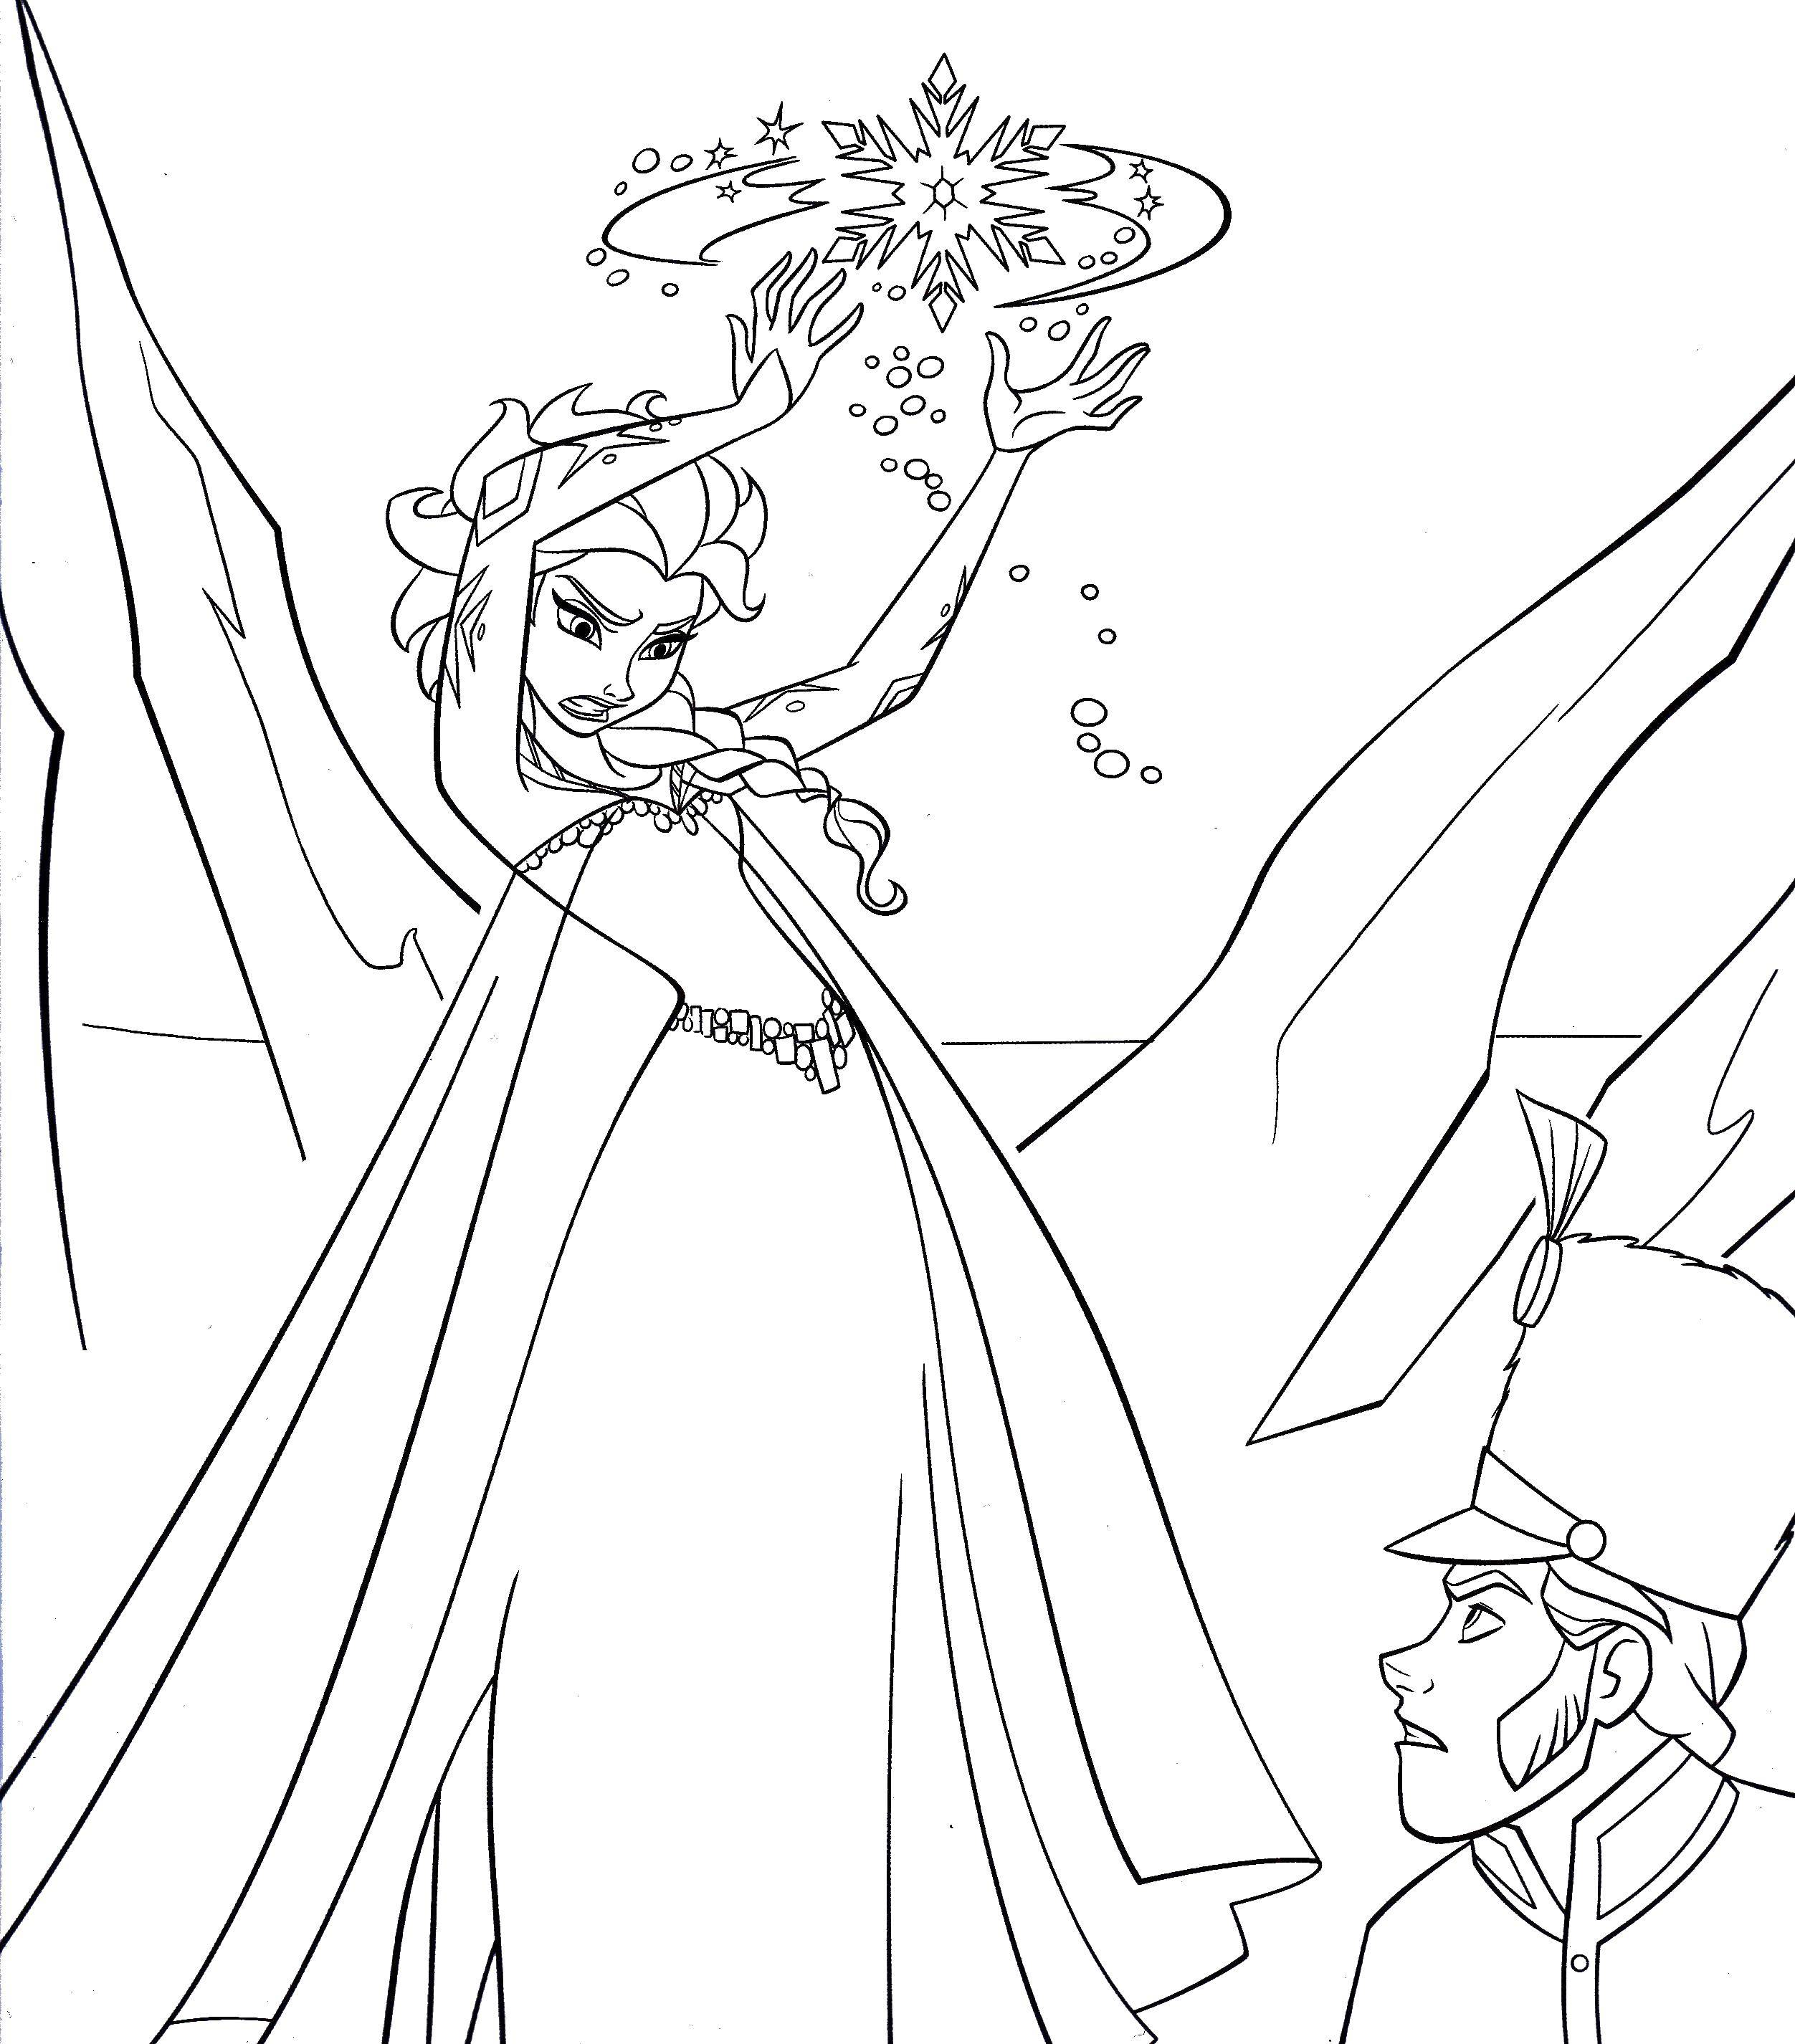 Coloring Elsa fighting Hans. Category Disney cartoons. Tags:  Elsa, Princess, crown.